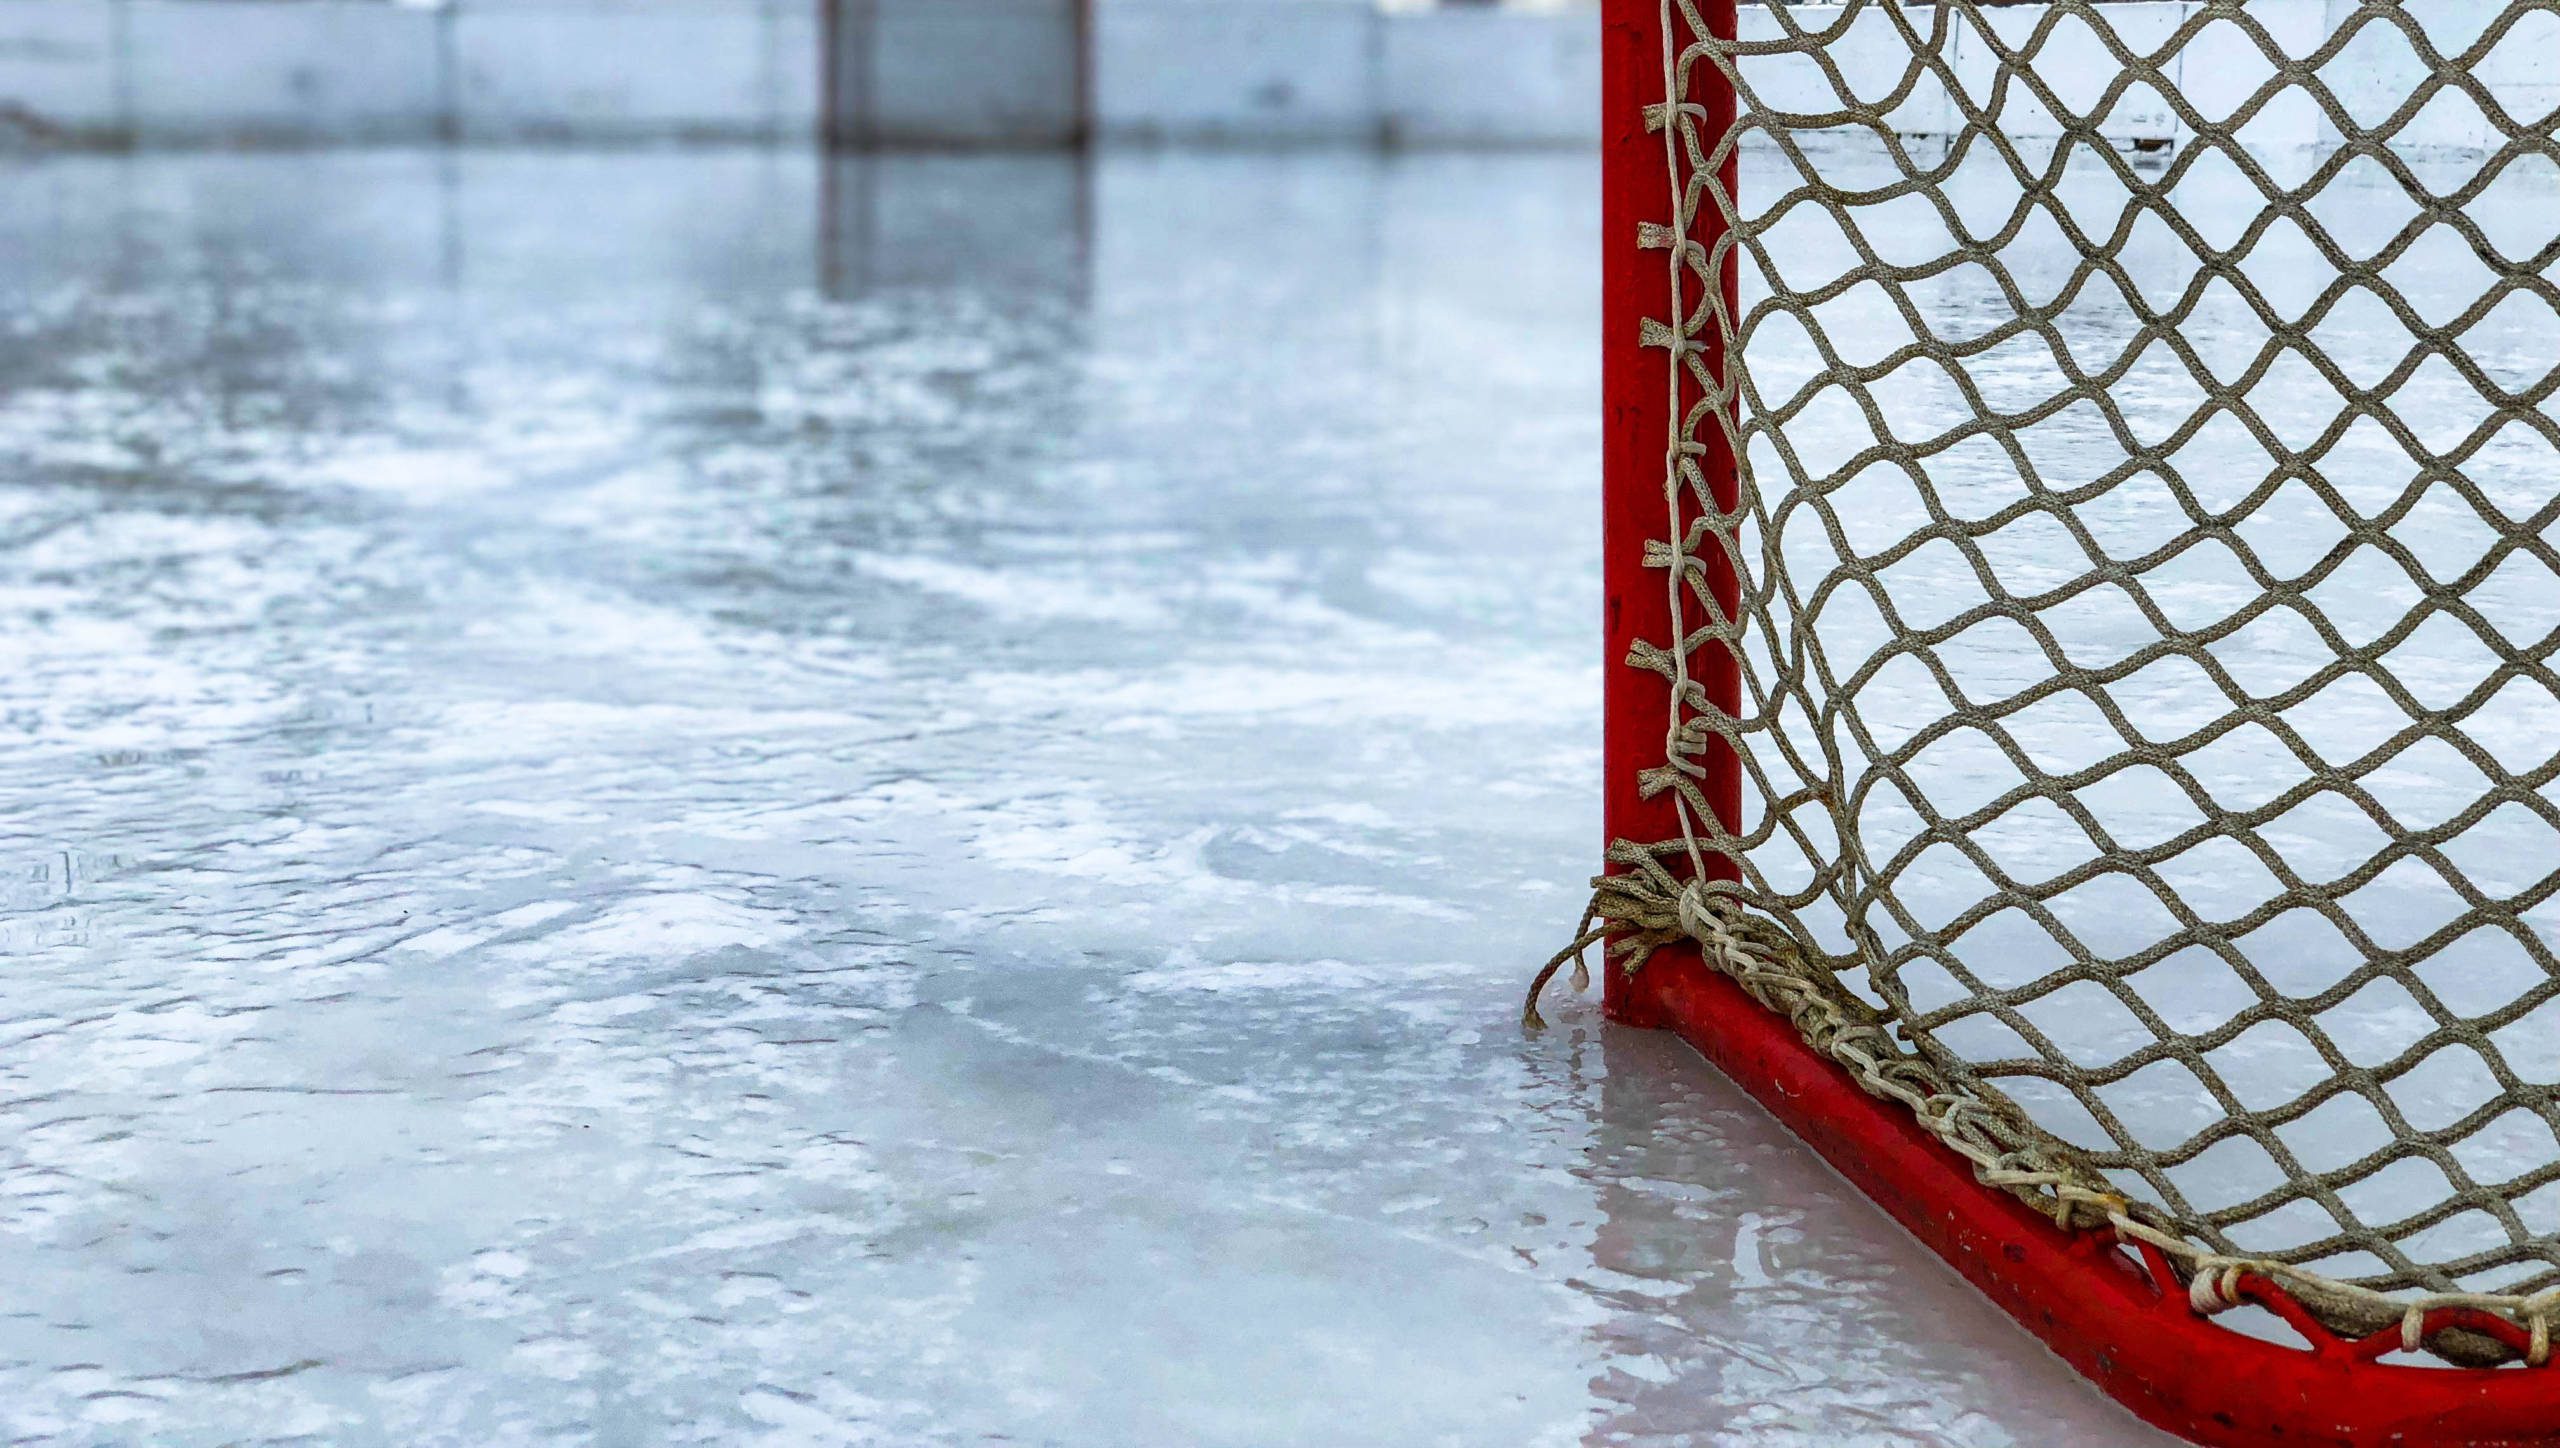 Photo of a hockey net - credit Chris Liverani